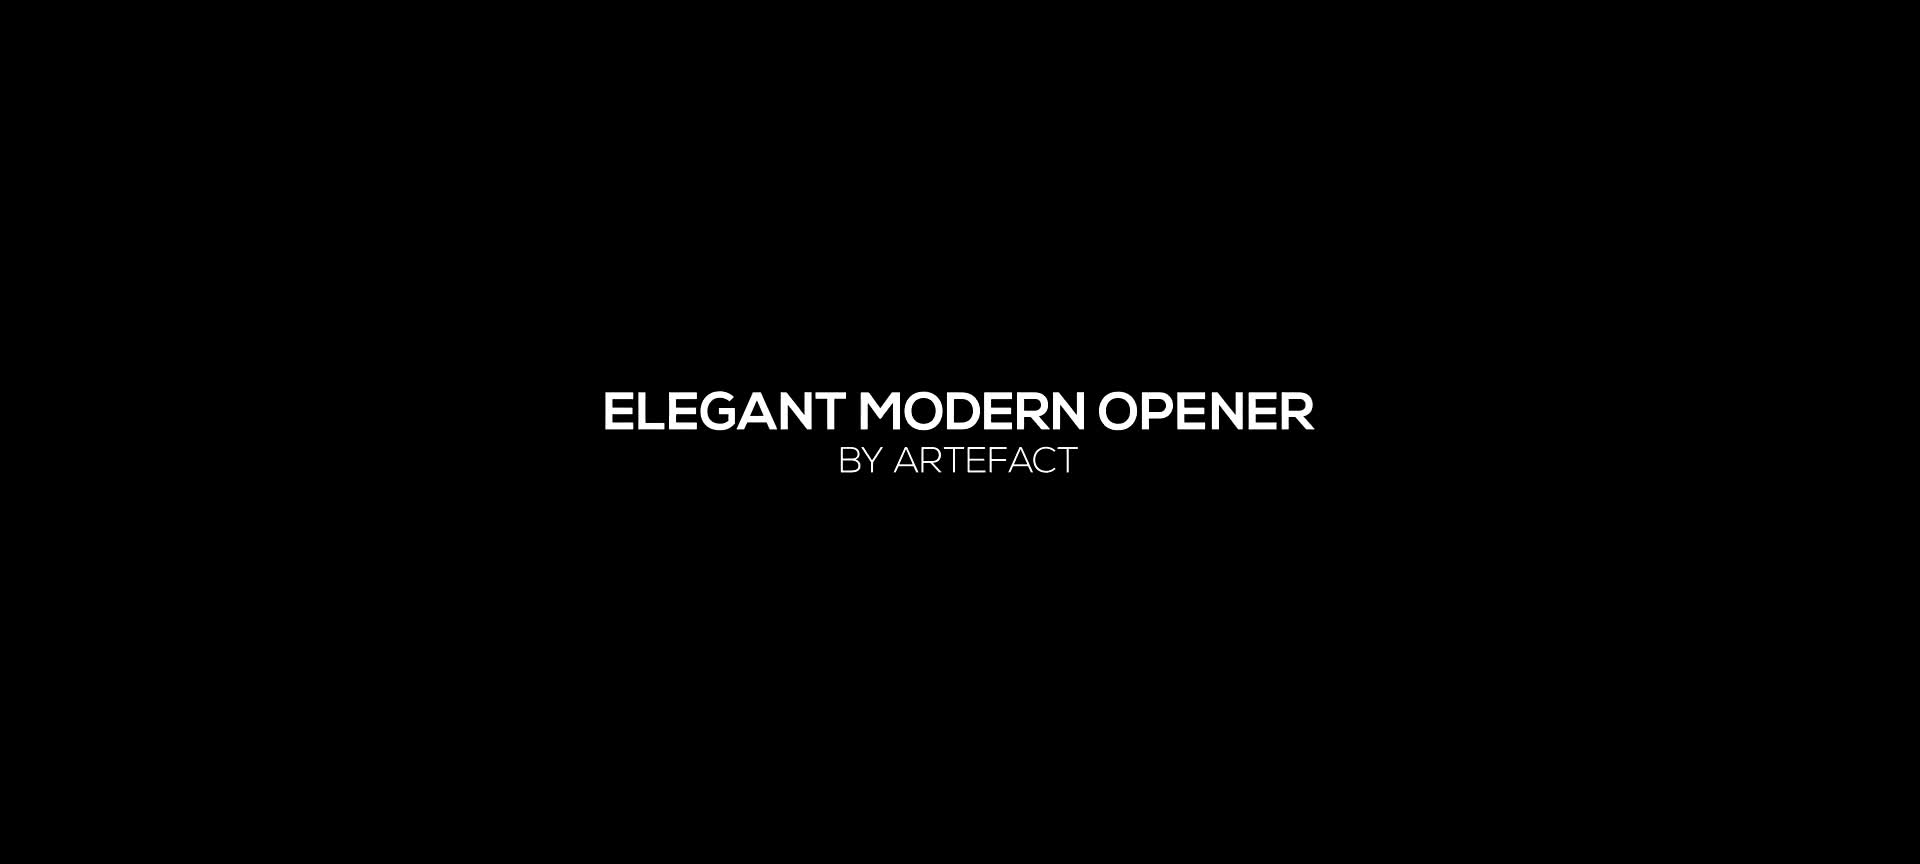 Elegant Modern Opener Videohive 13830840 After Effects Image 1